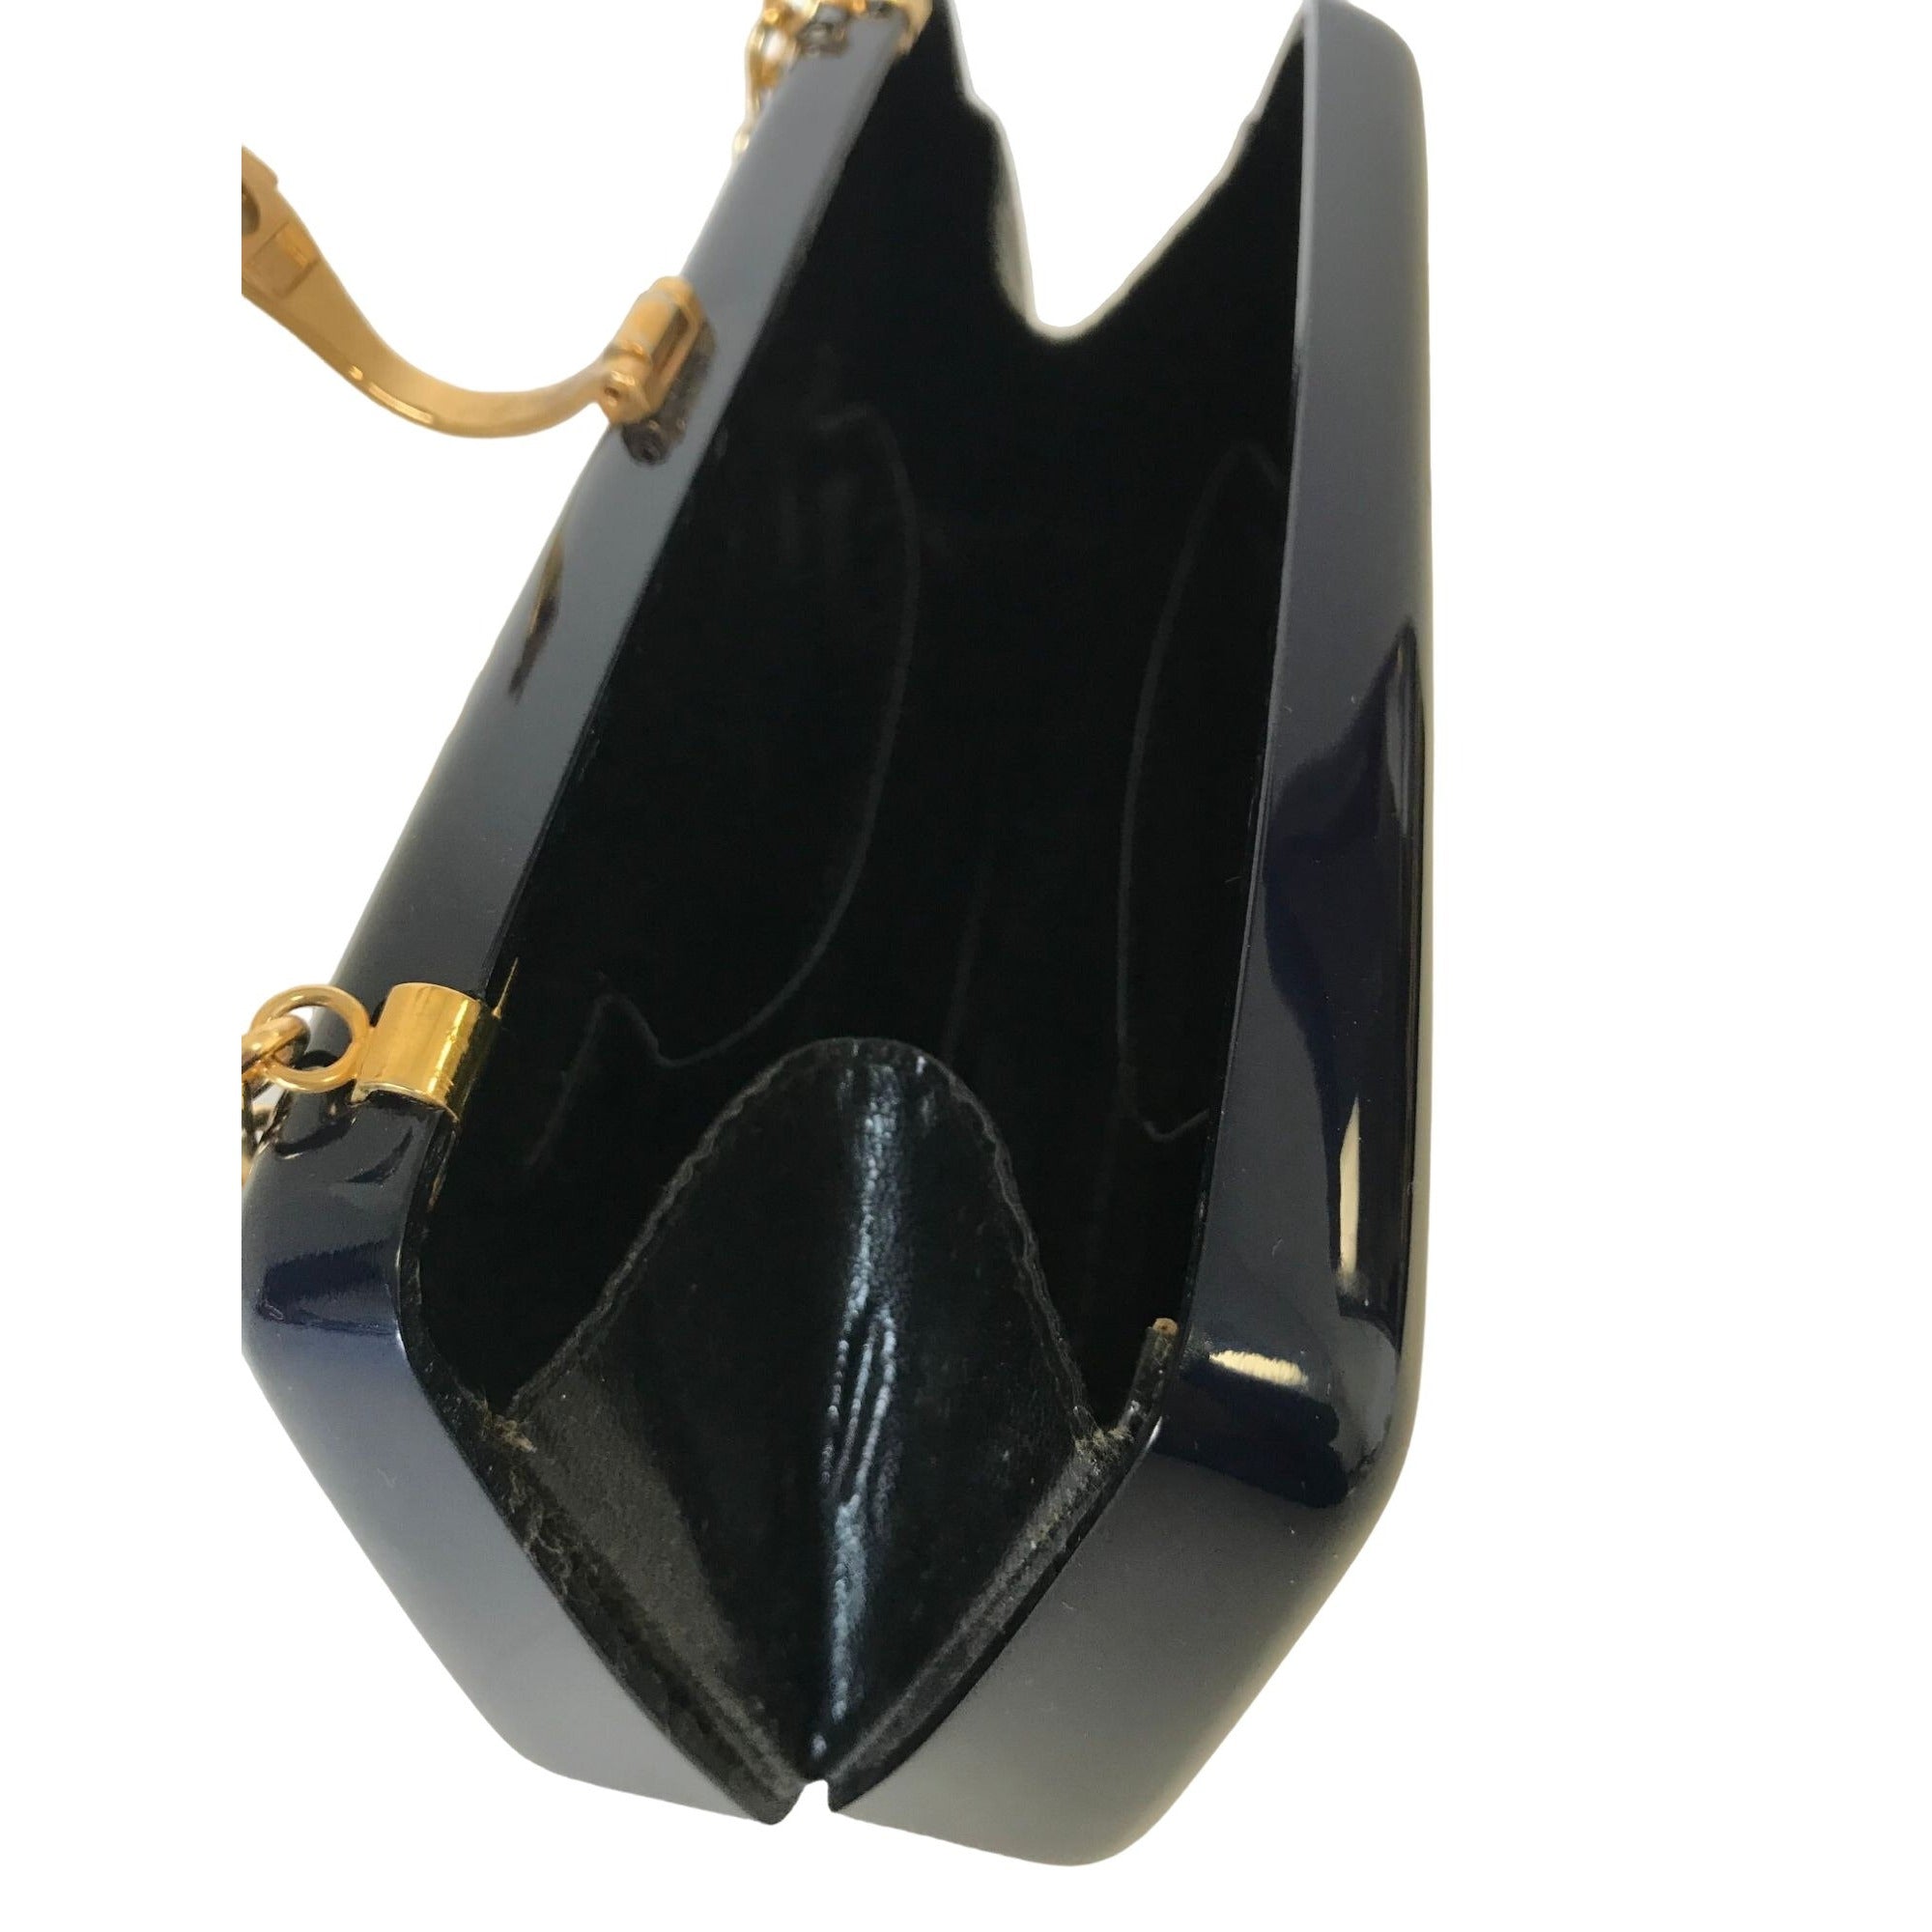 Vintage Lucite Structured Bag Navy Blue Classic Lucite Box Clutch Crossbody Shoulder Bag